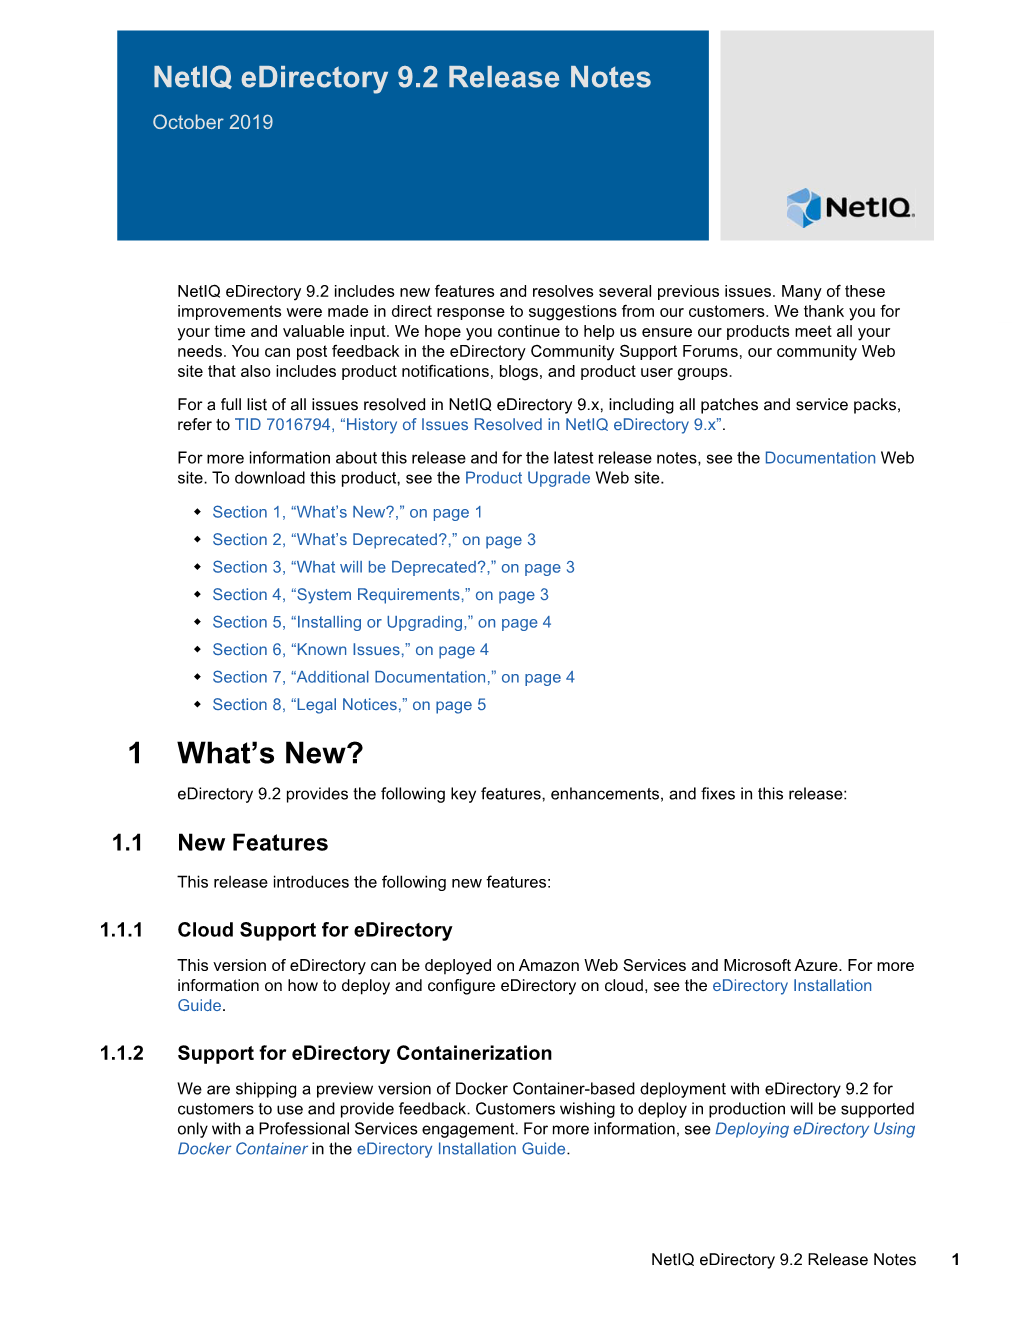 Netiq Edirectory 9.2 Release Notes October 2019